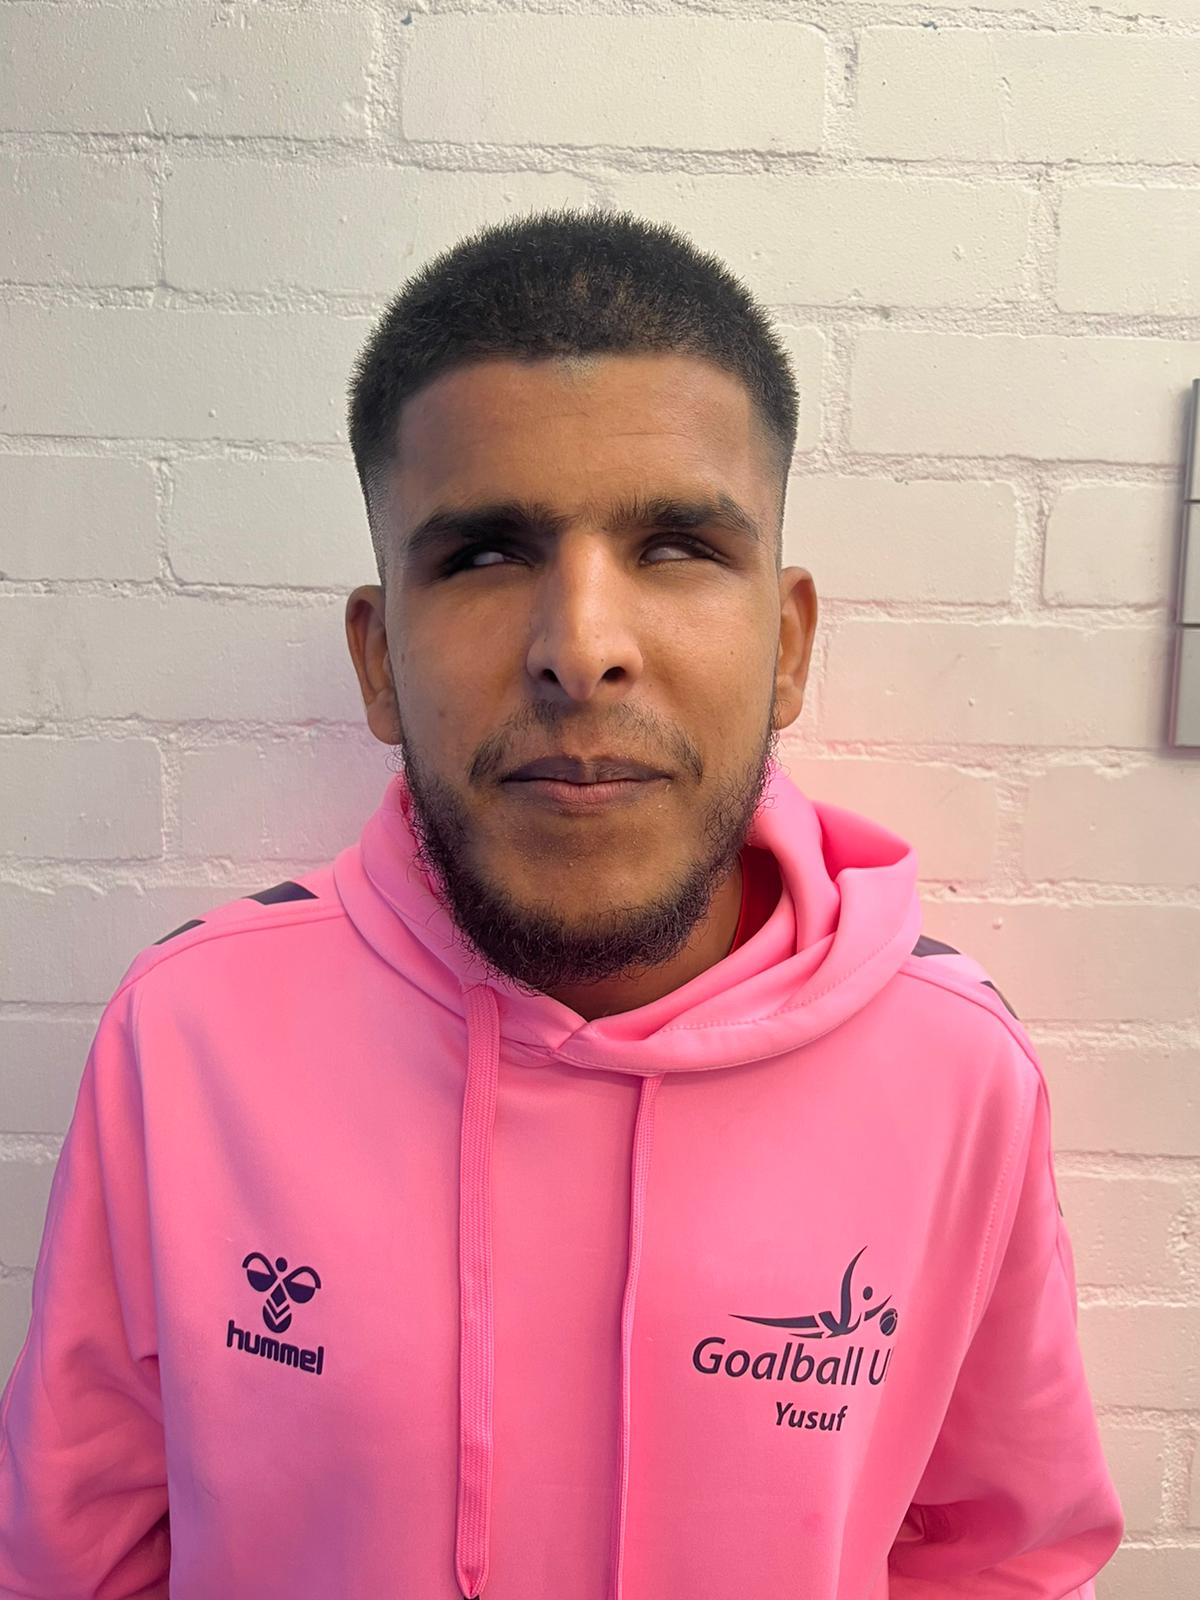 Yusuf in his pink Youth Forum hoodie